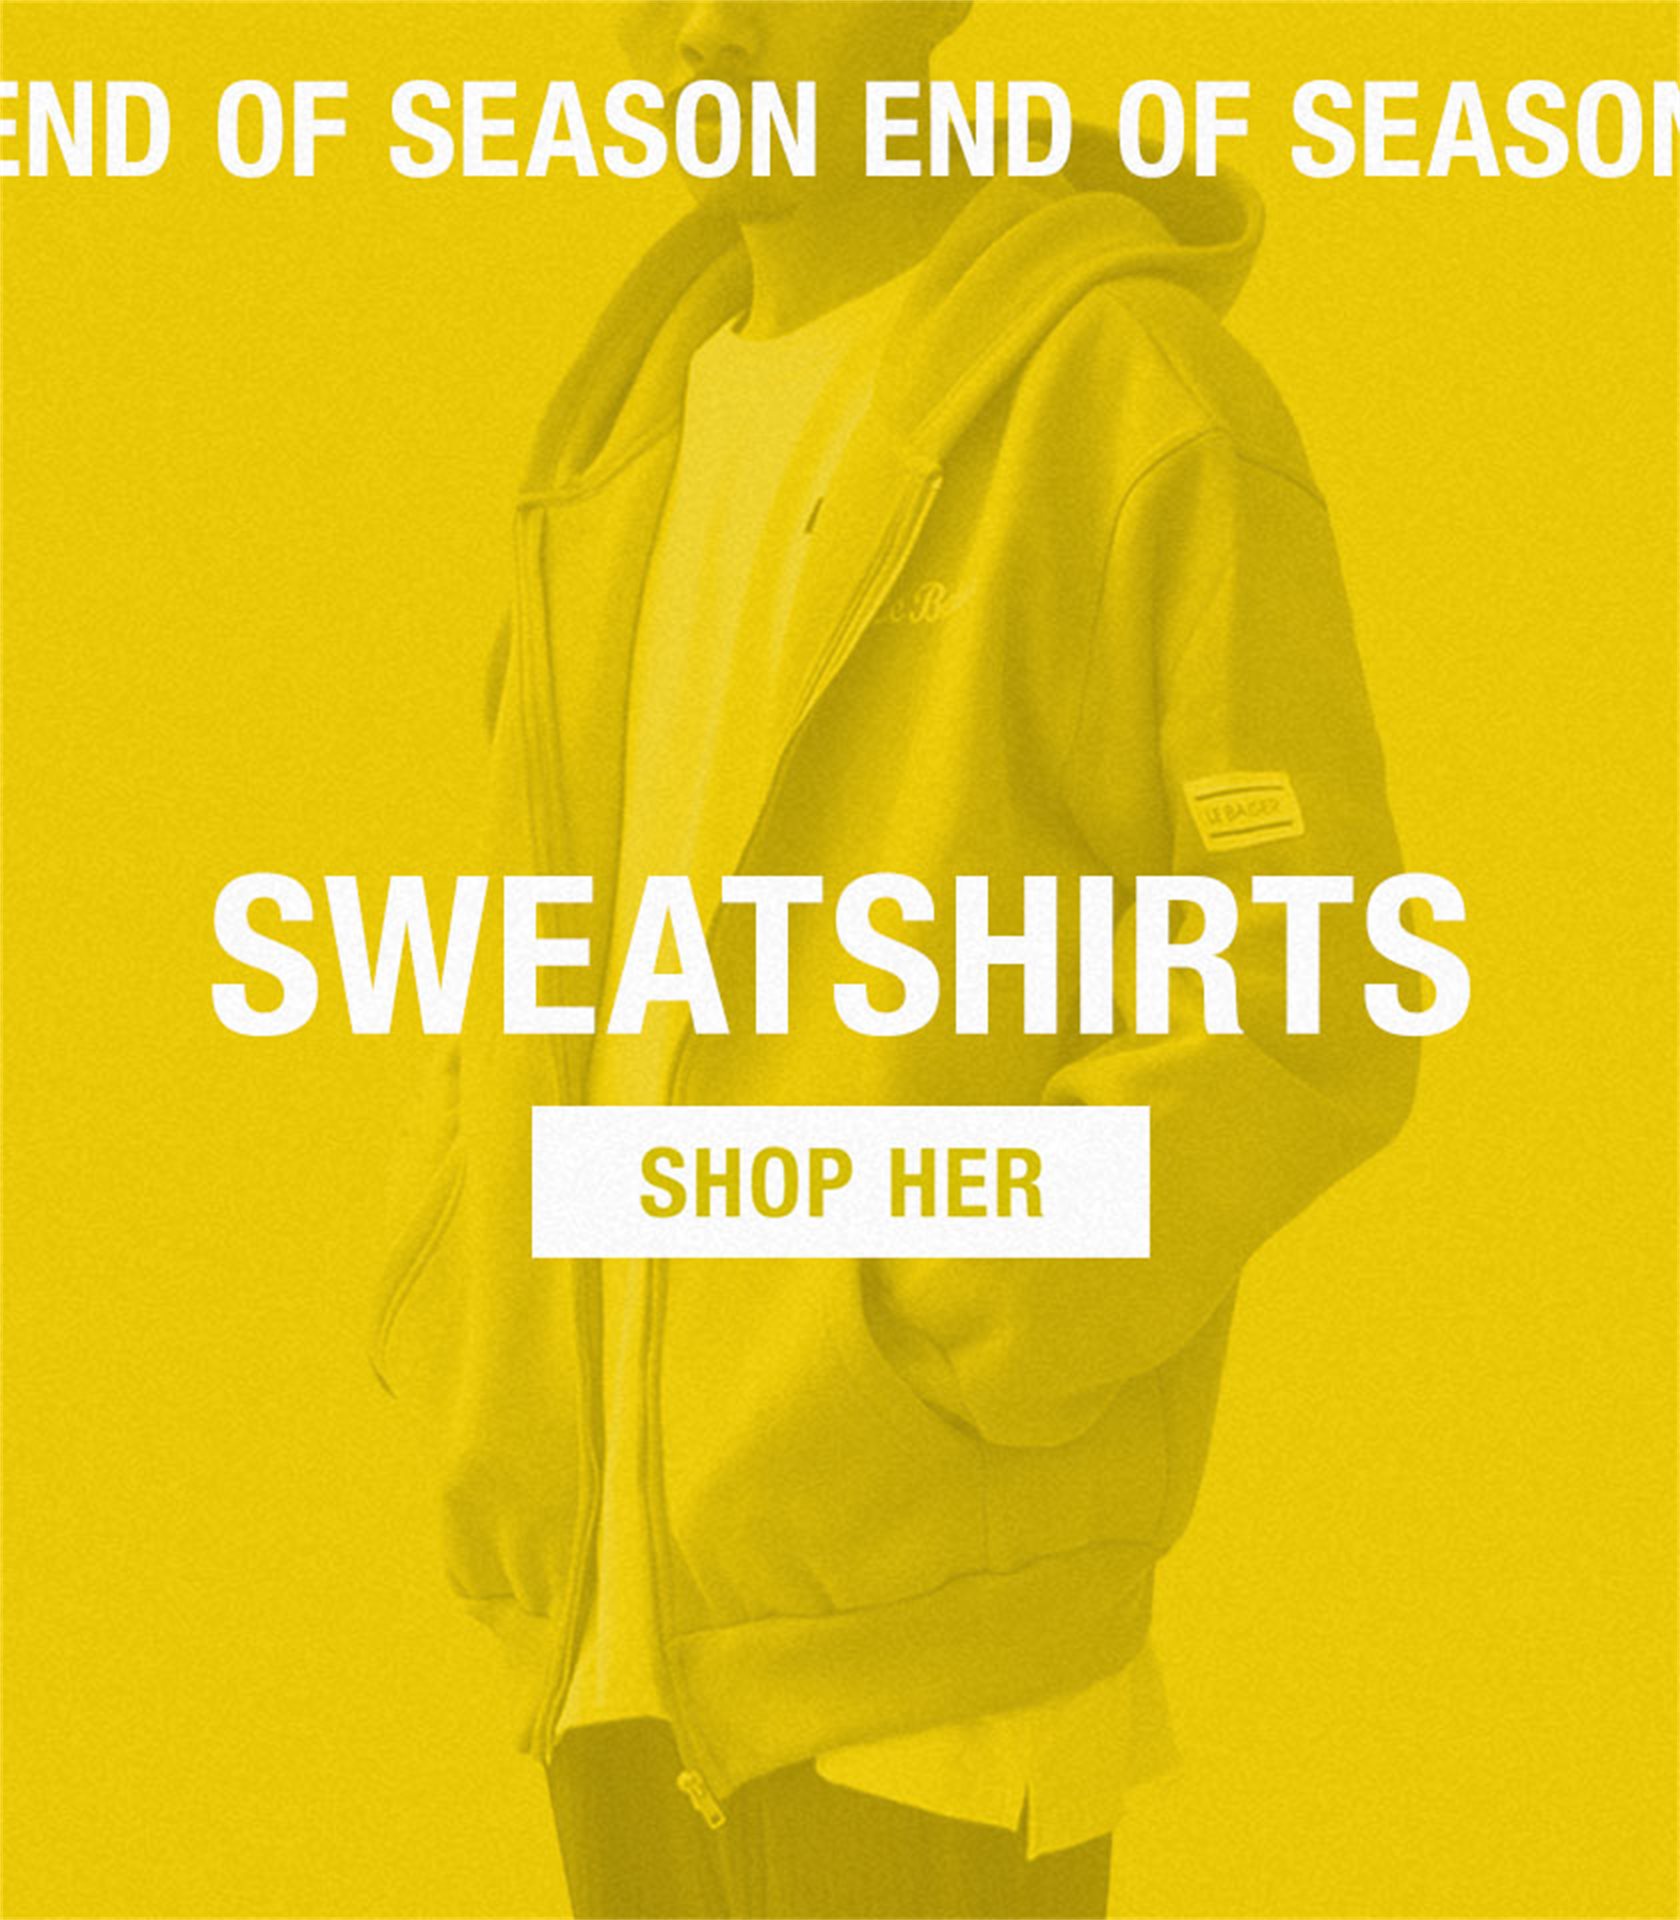 End of Season - Sweatshirts